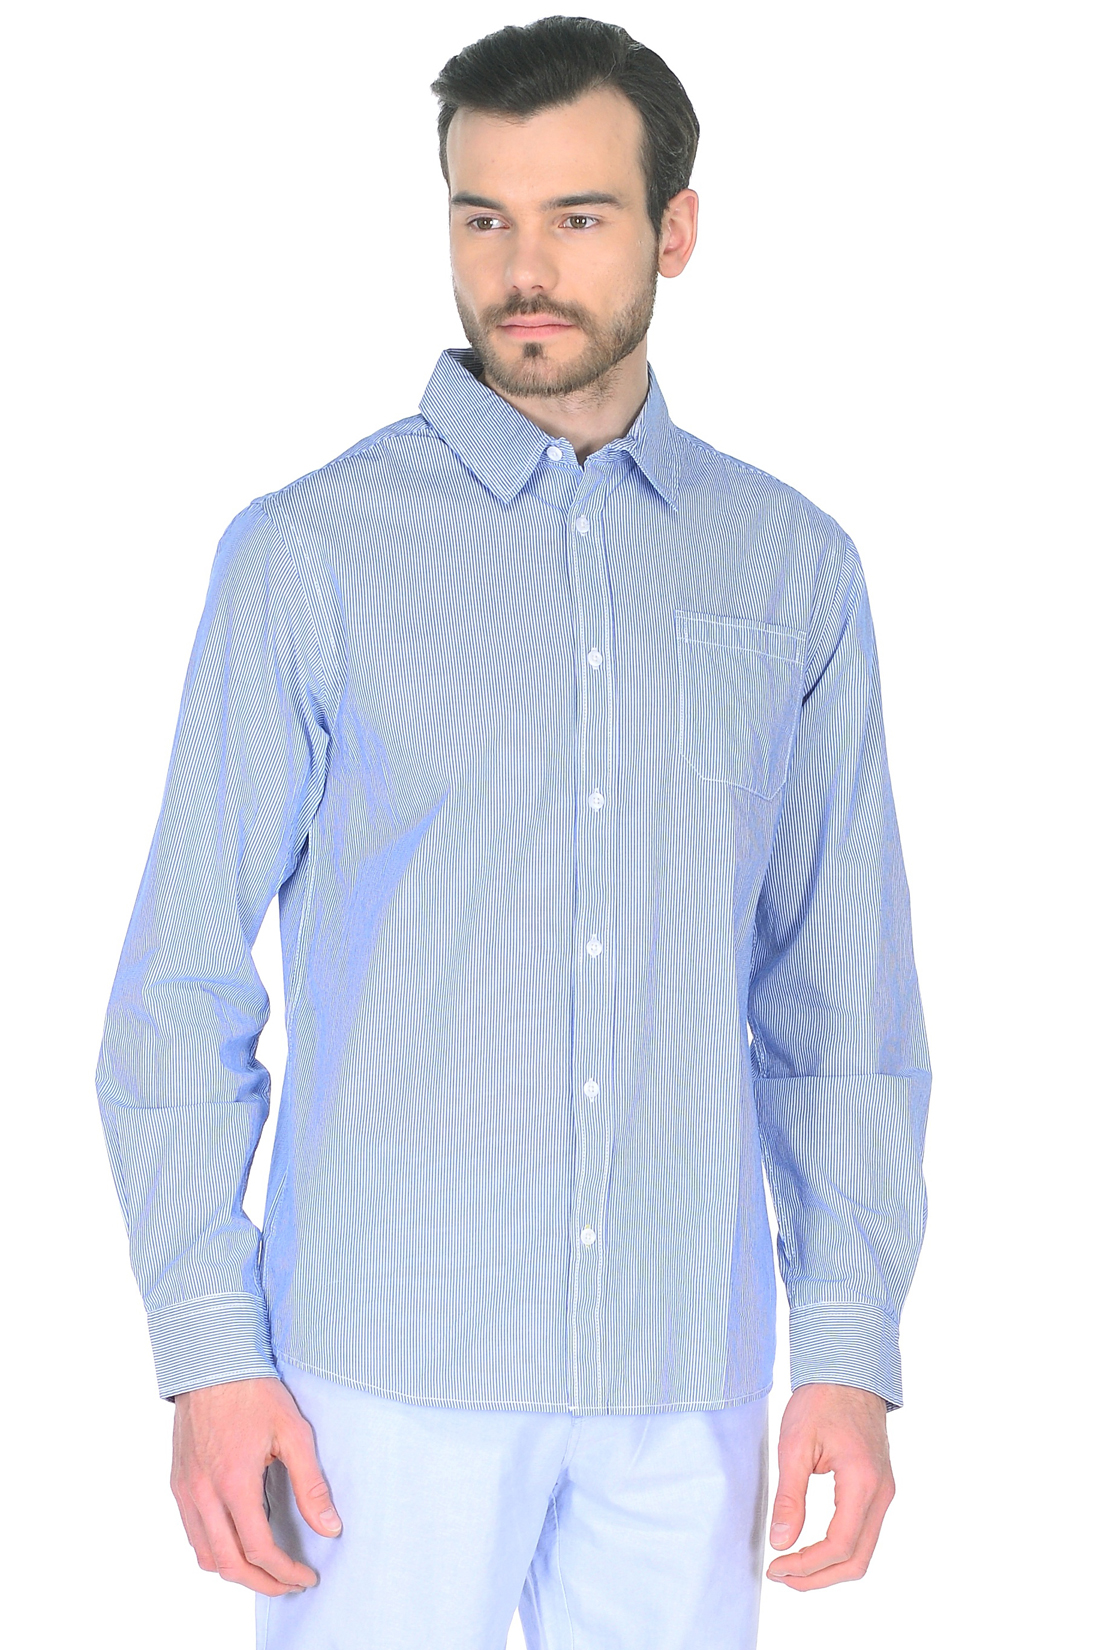 Рубашка в тонкую полоску (арт. baon B668012), размер M, цвет angel blue striped#голубой Рубашка в тонкую полоску (арт. baon B668012) - фото 1